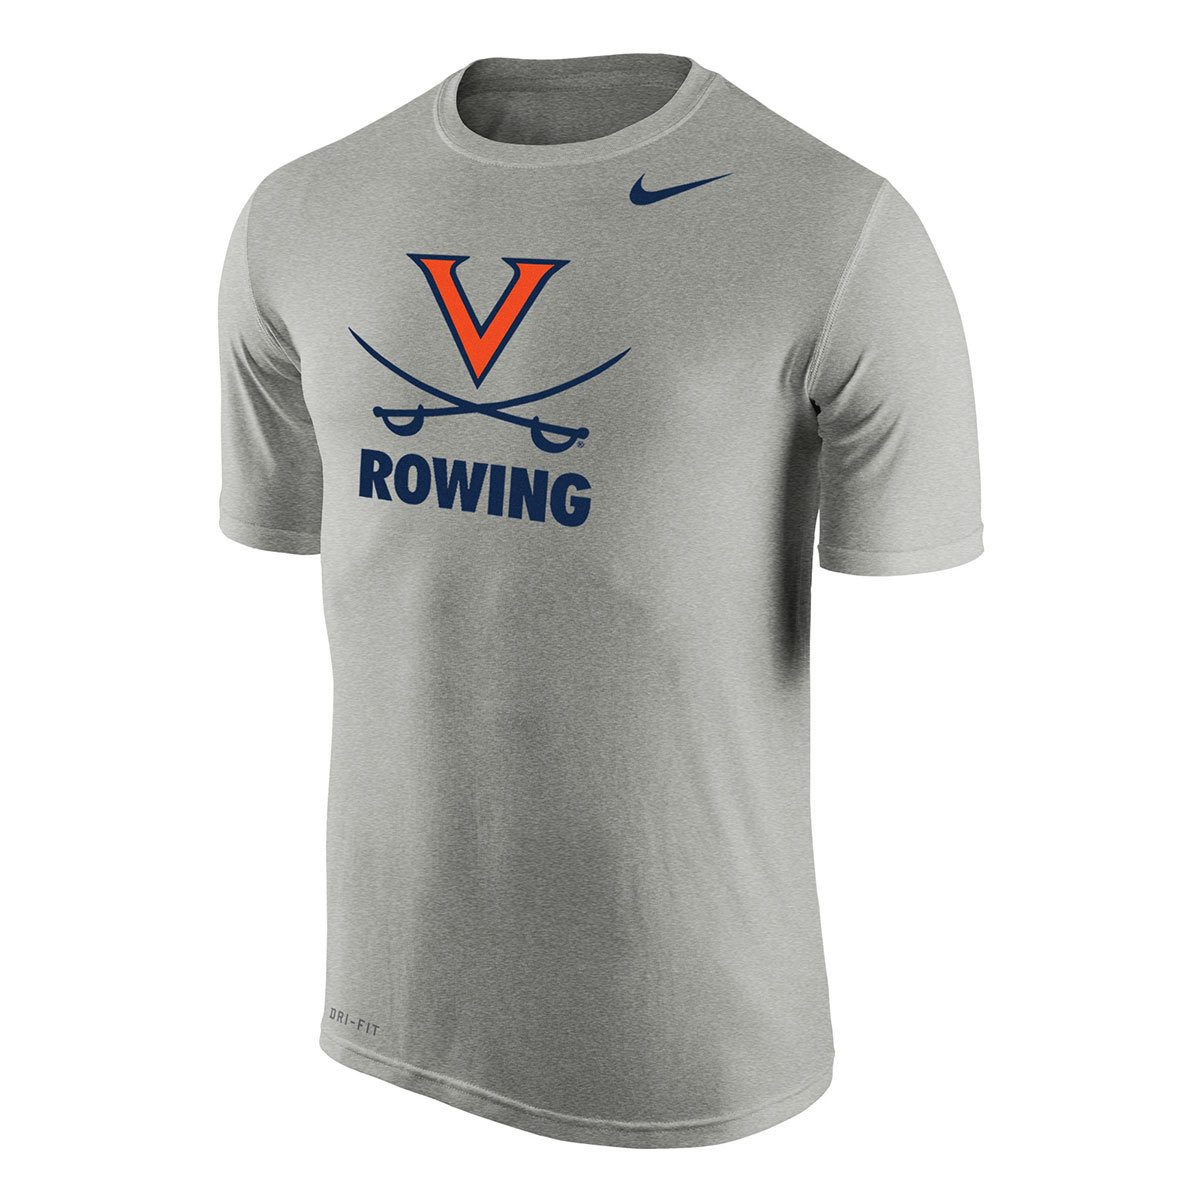 Virginia Rowing NIKE Dri-Fit T-shirt